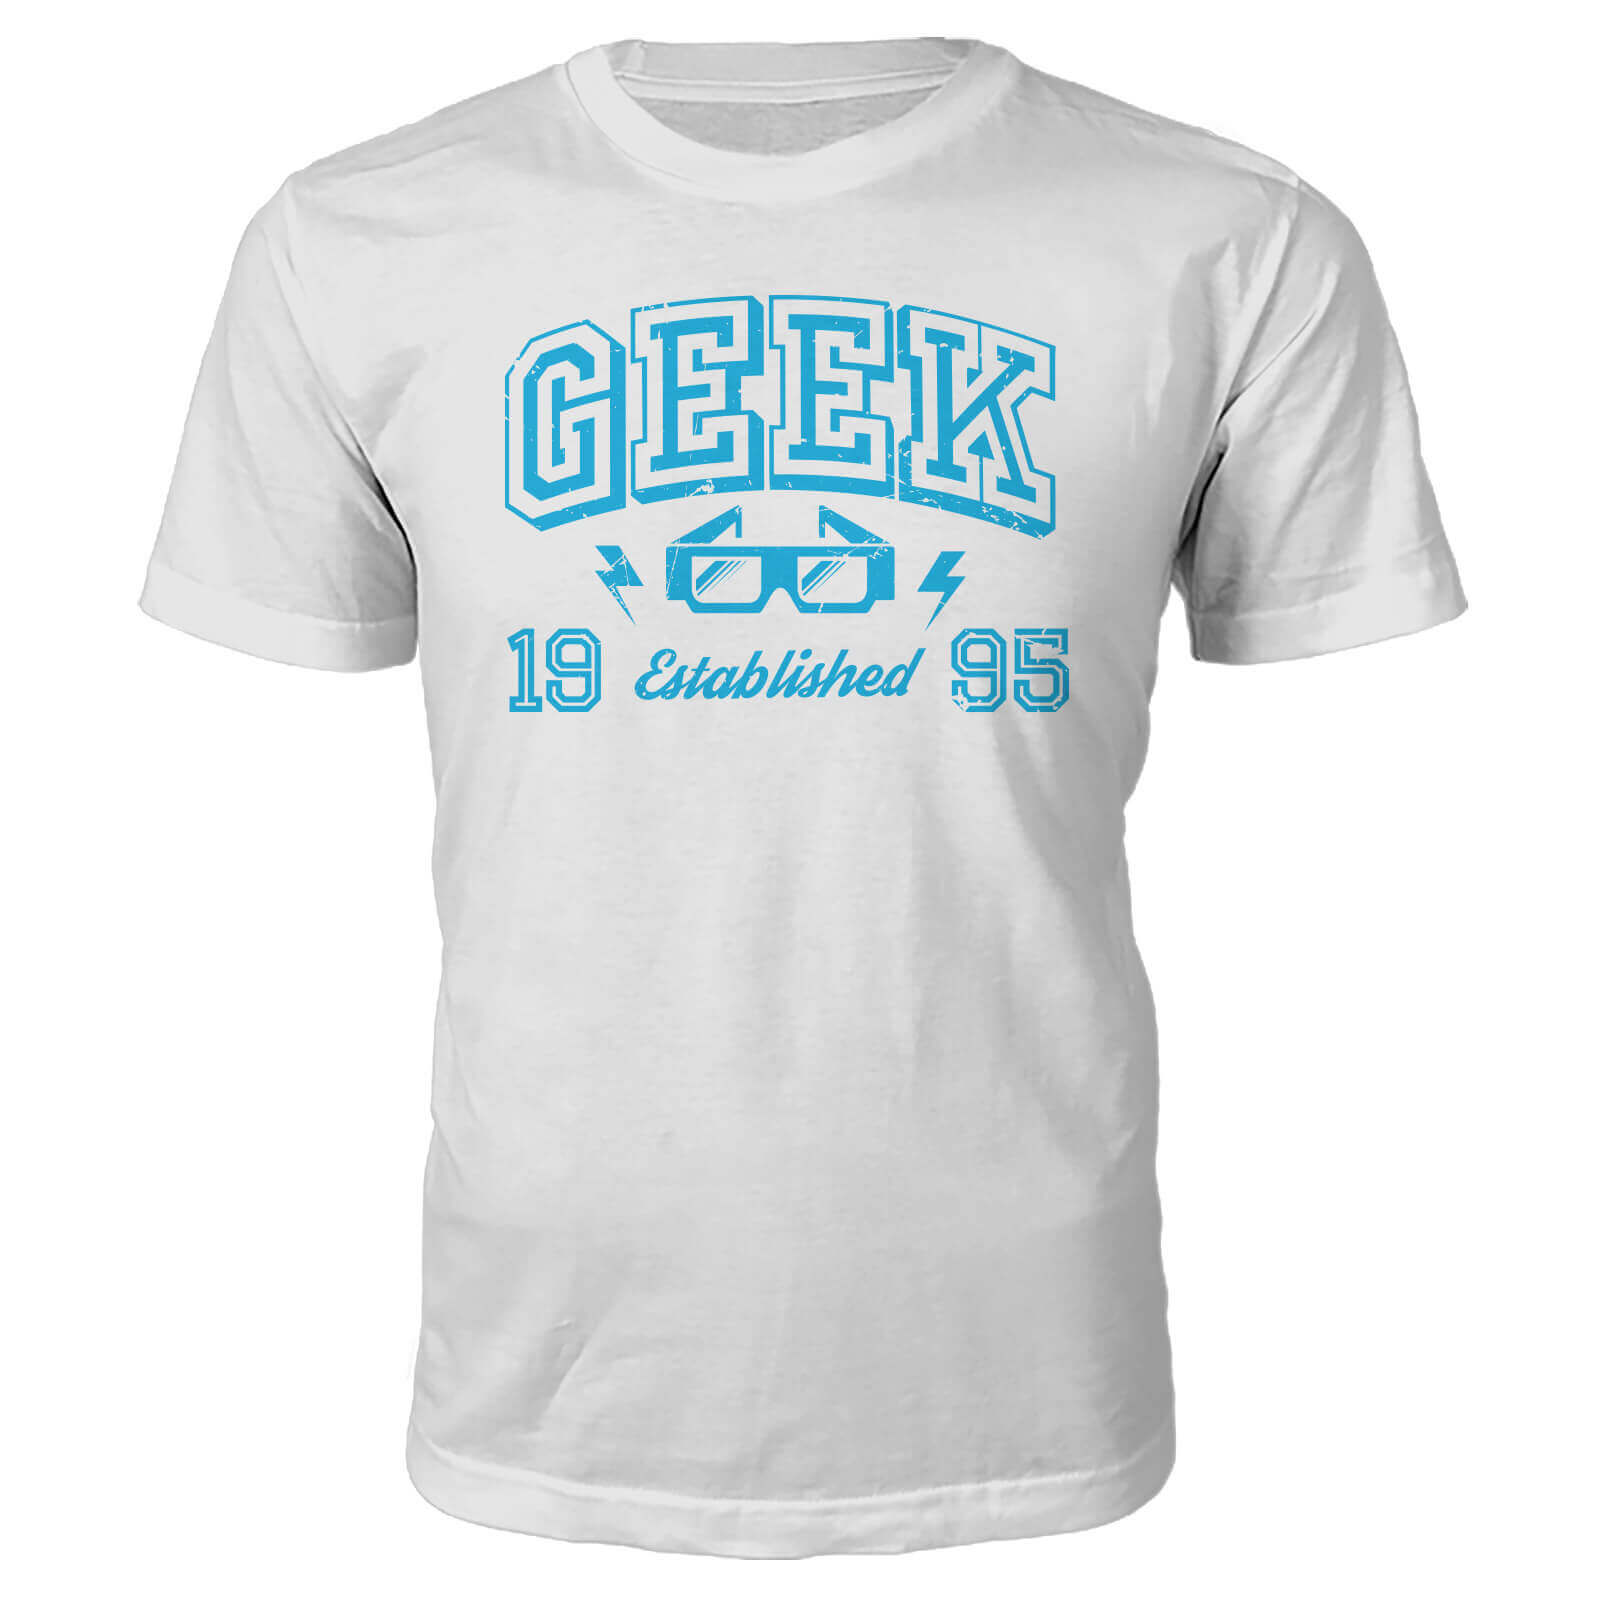 Geek Established 1990's T-Shirt- White - XL - 1995